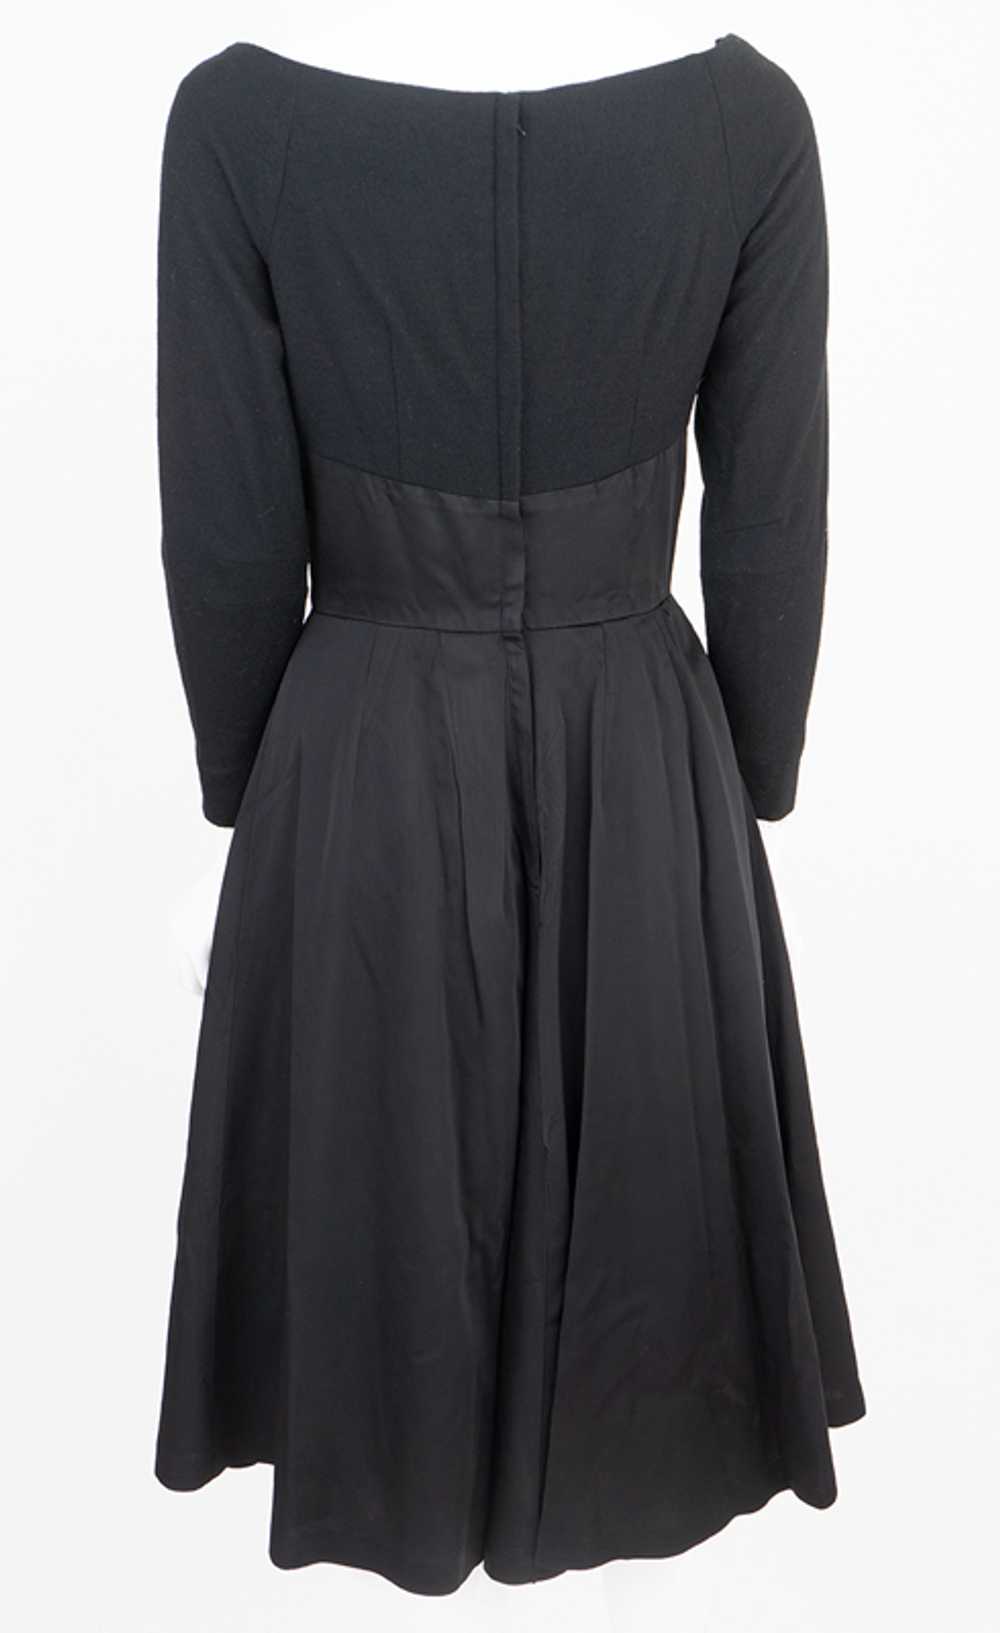 1950s Black Cocktail Dress - image 3